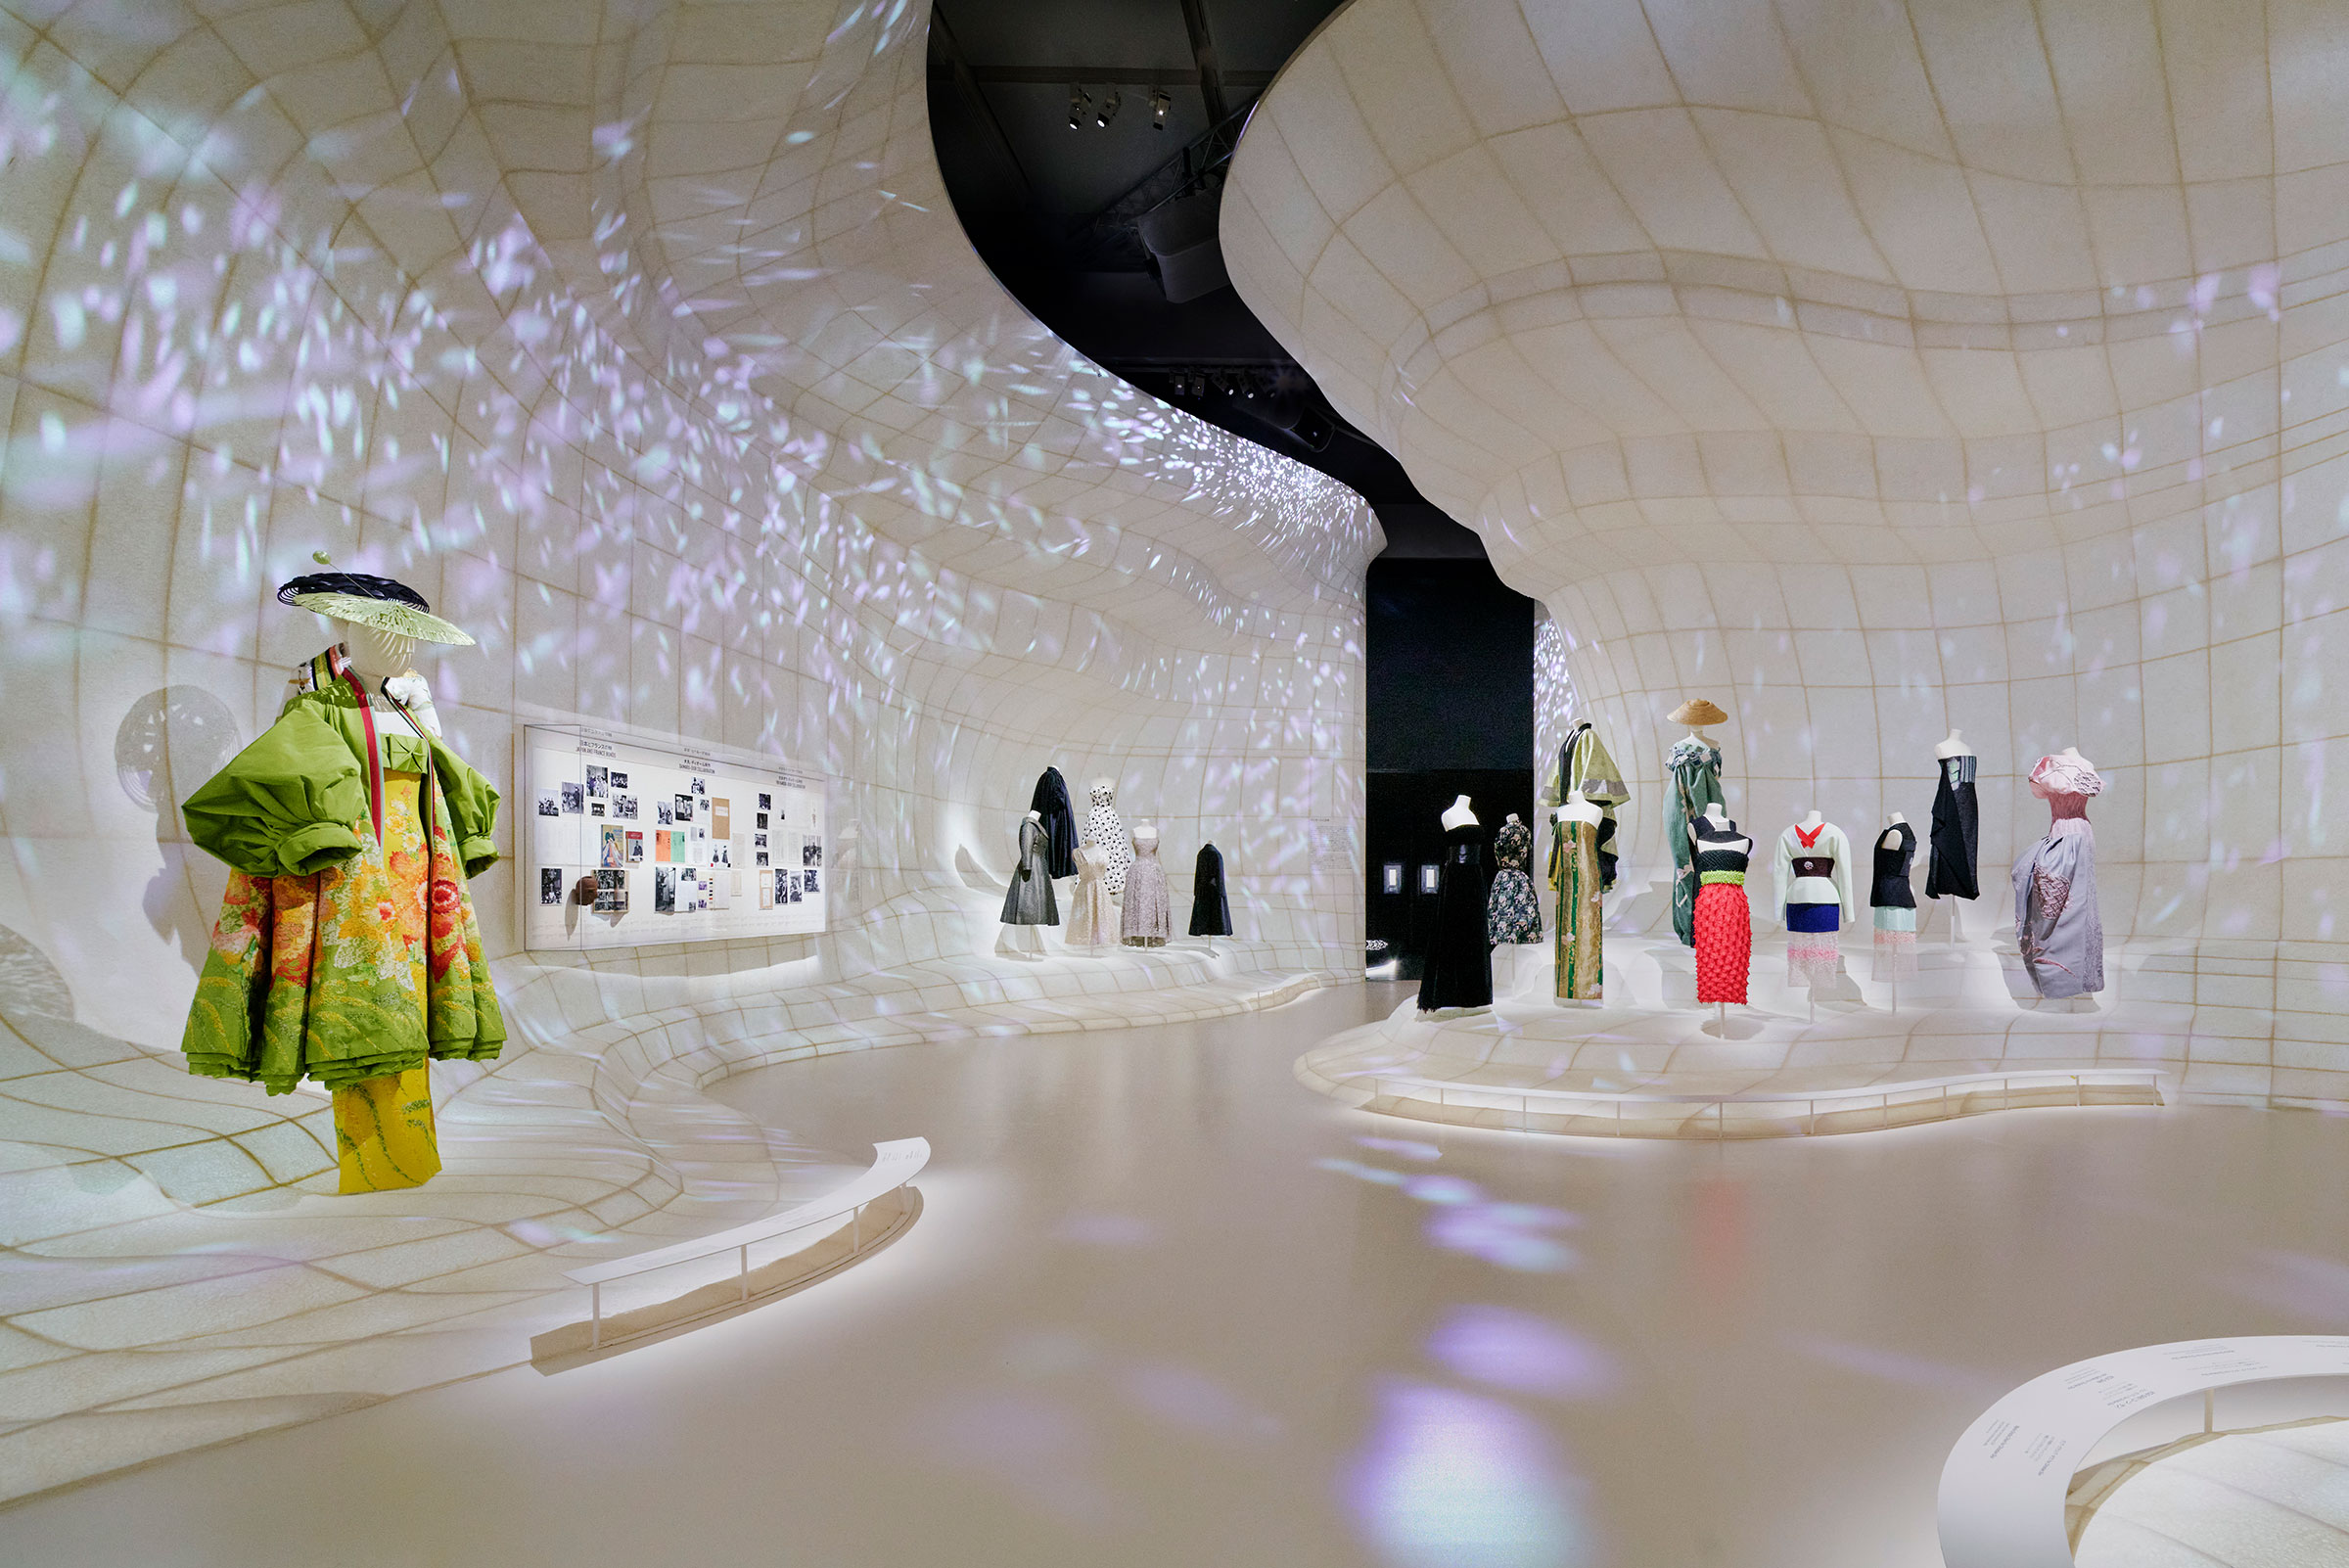 OMA / 重松象平による、東京都現代美術館でのディオール展の会場構成。70年以上のブランドの歴史や日本との関りを紹介する展覧会。13のテーマに沿った多様で没入感ある空間を求めて、日本の伝統